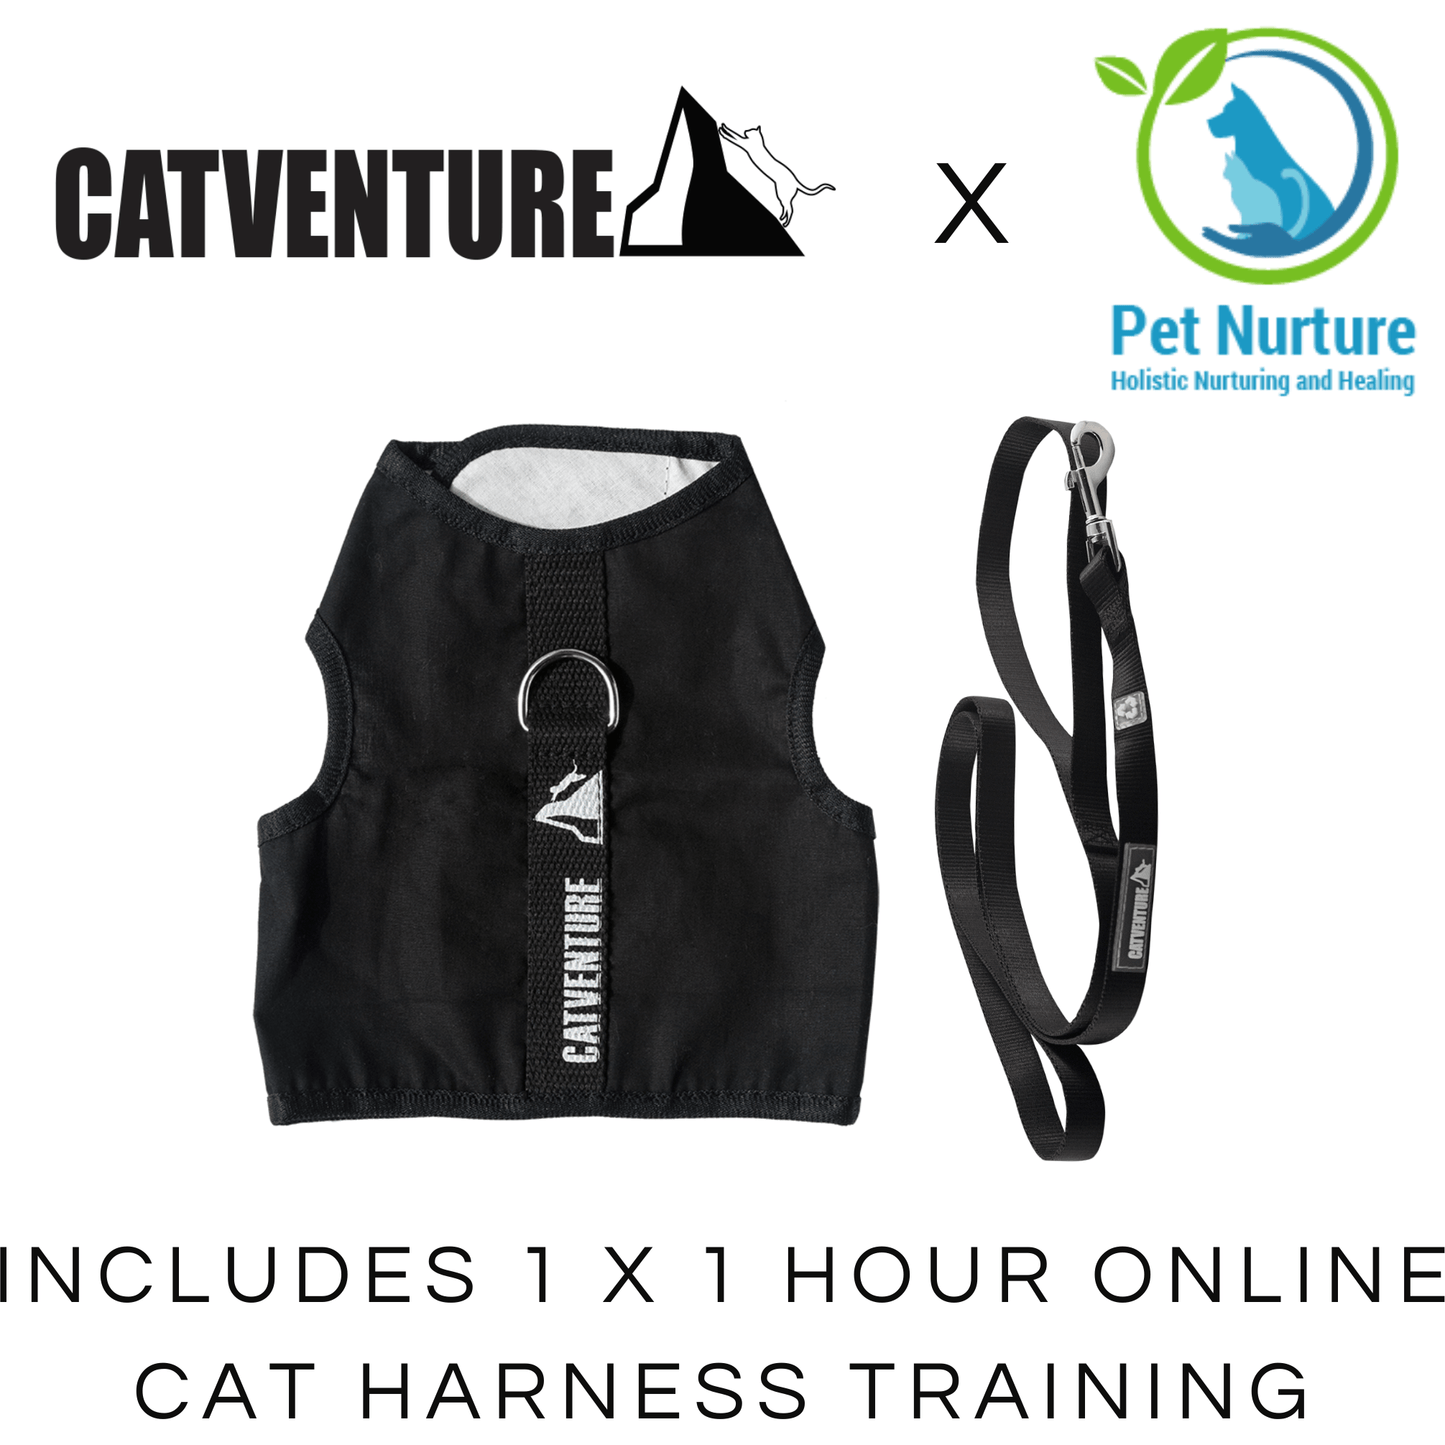 Black Catventure escape proof cat harness and black leash with Pet Nurture Training Bundle